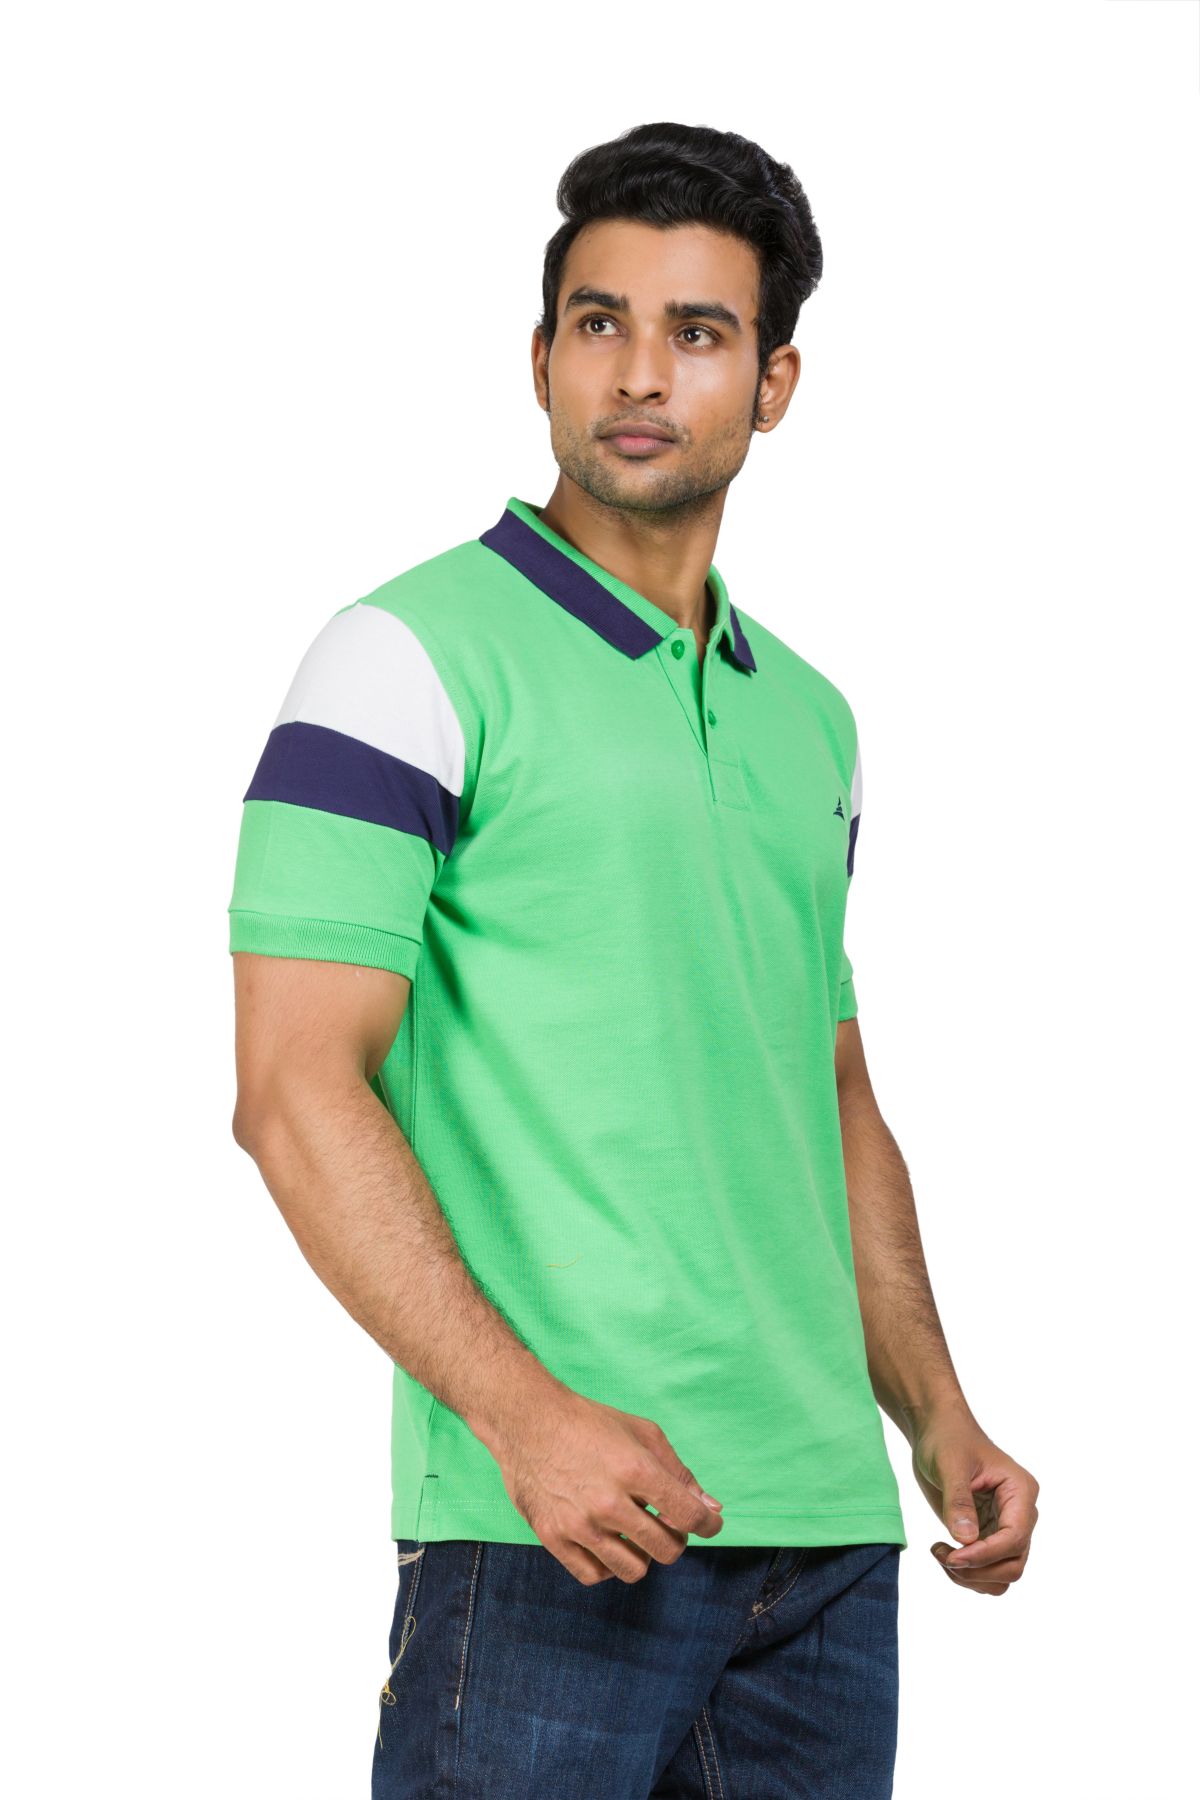 Cotton Blend Polo T-shirt Green-White-Black For Men